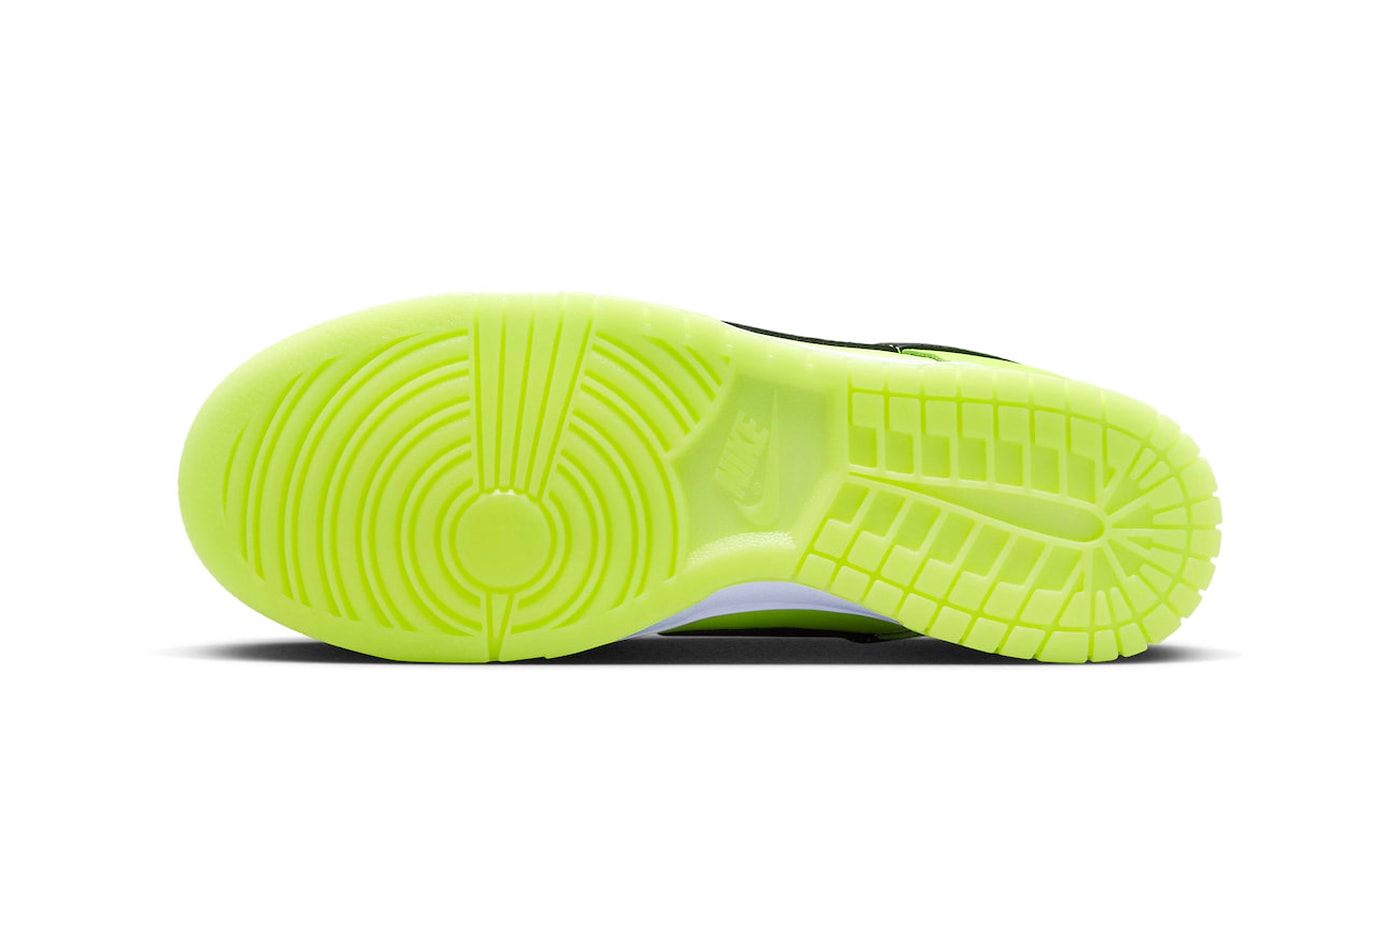 Nike Dunk Low Glow in the Dark Official Look Release Info FJ4610-702 Date Buy Price Venom Green Black Glow